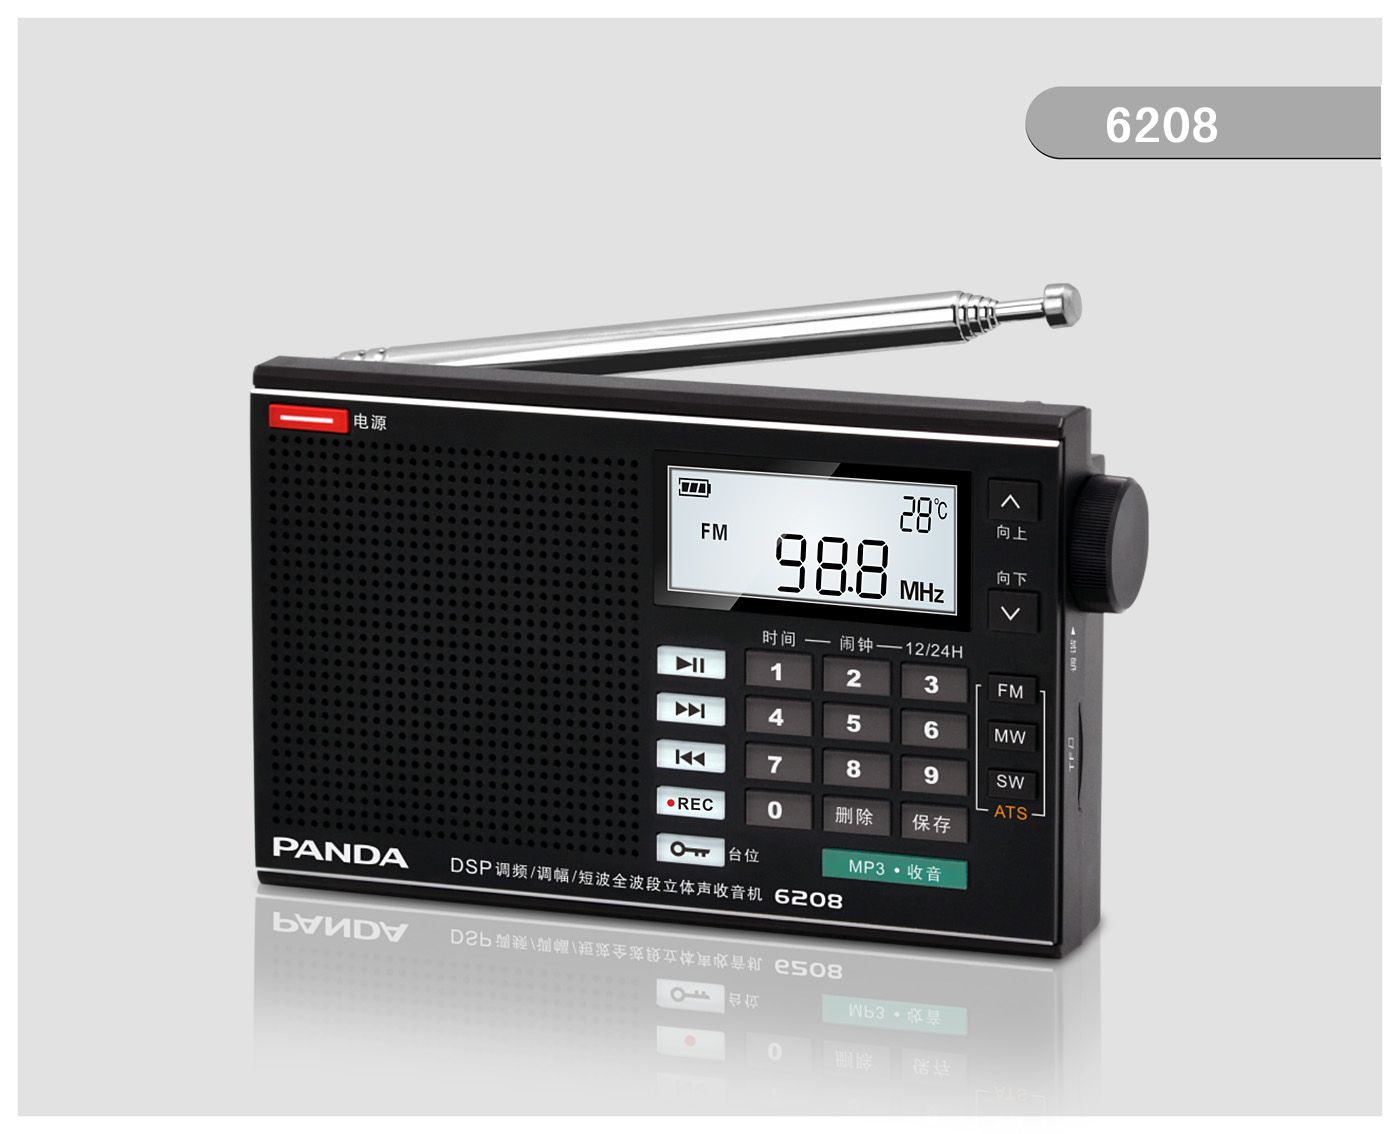 6208 AM/FM/SW DSP radio